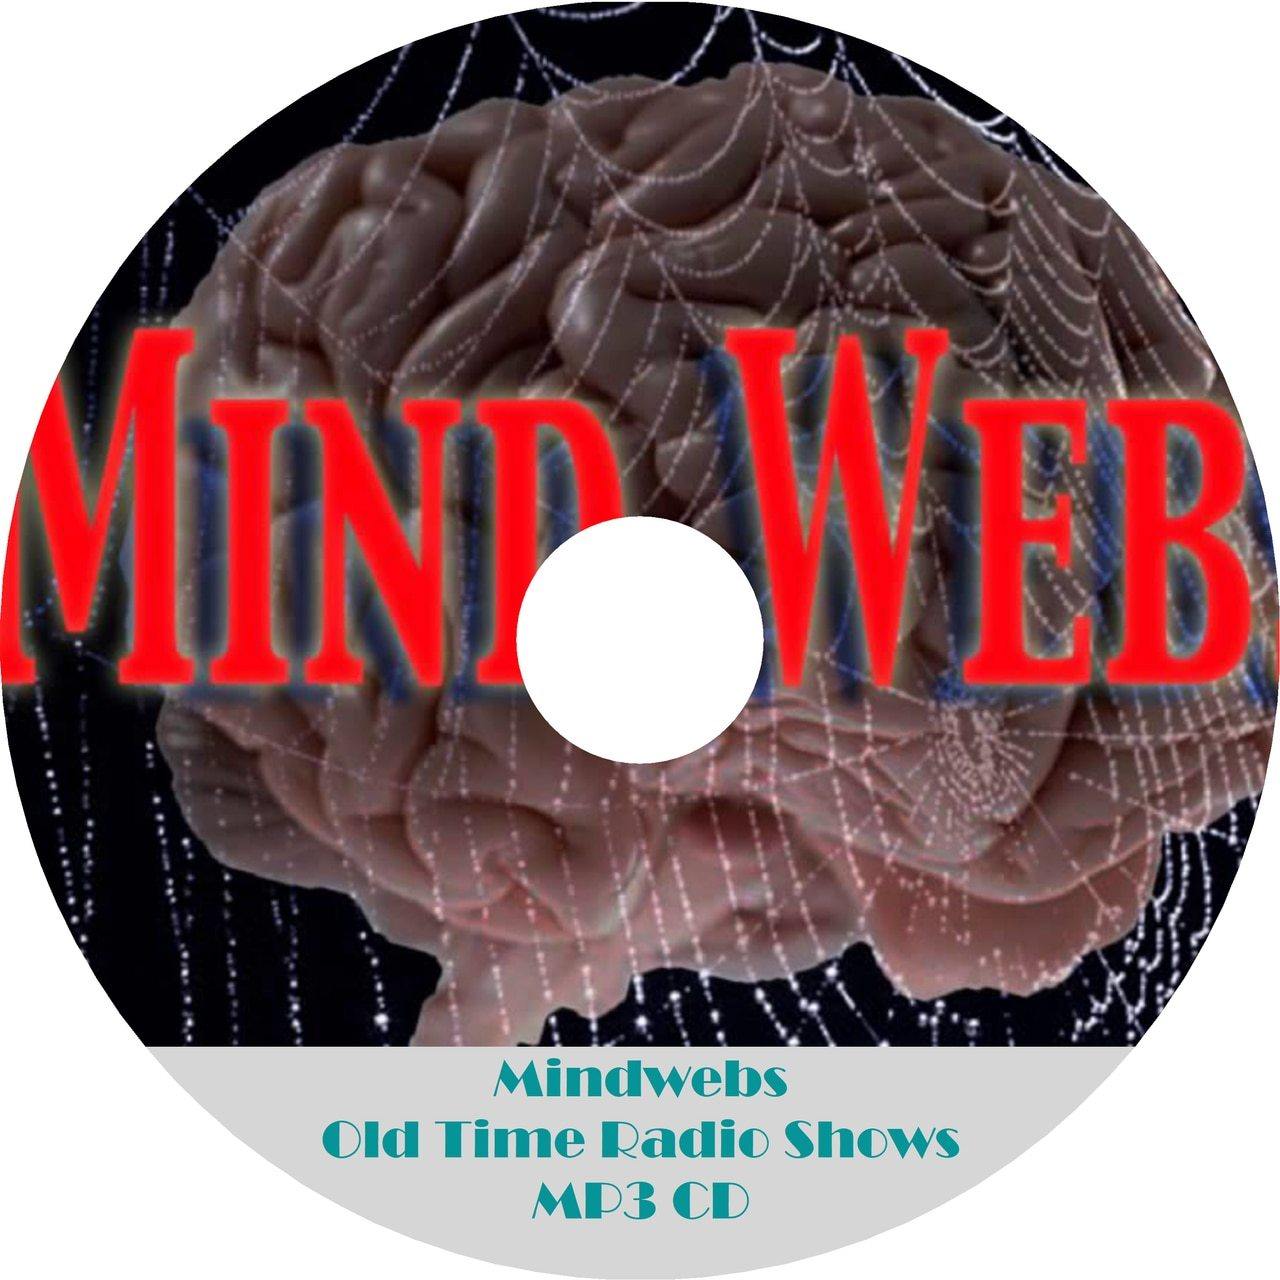 Mindwebs Old Time Radio Shows 149 Episodes On MP3 CD - OTR World